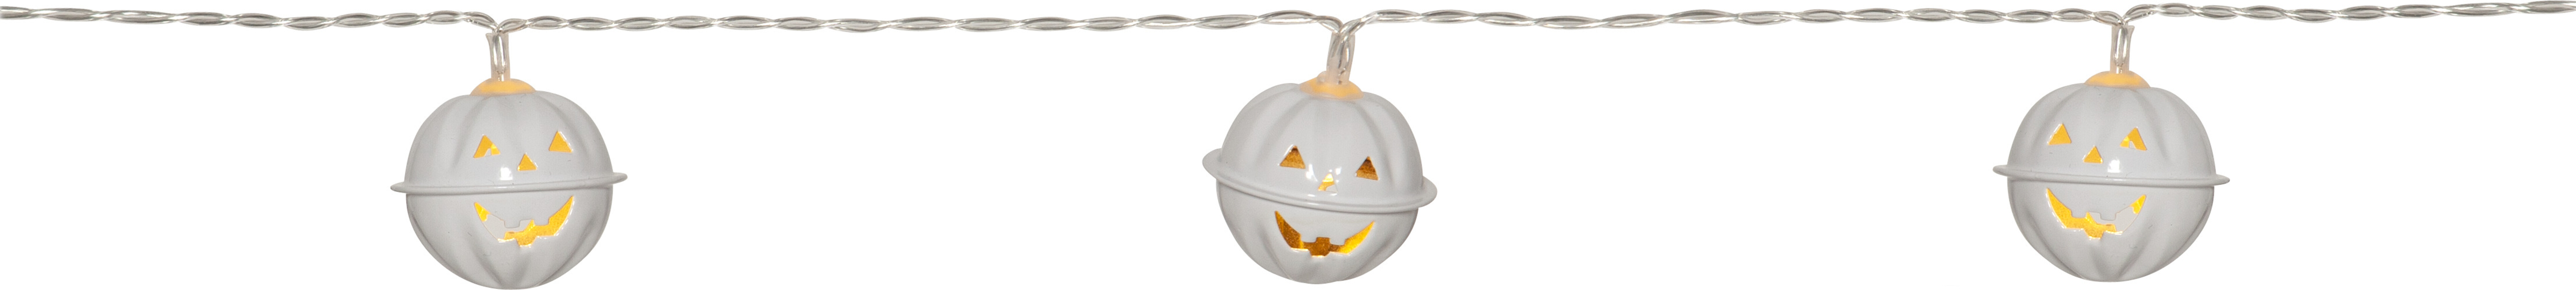 Star Trading 729-61 LED-Lichterkette "Halloween"10 ww LED, weiß, Metall-Kürbisse, ca. 135x3,5 cm, Batterie, Timer,Vierfarb-Karton